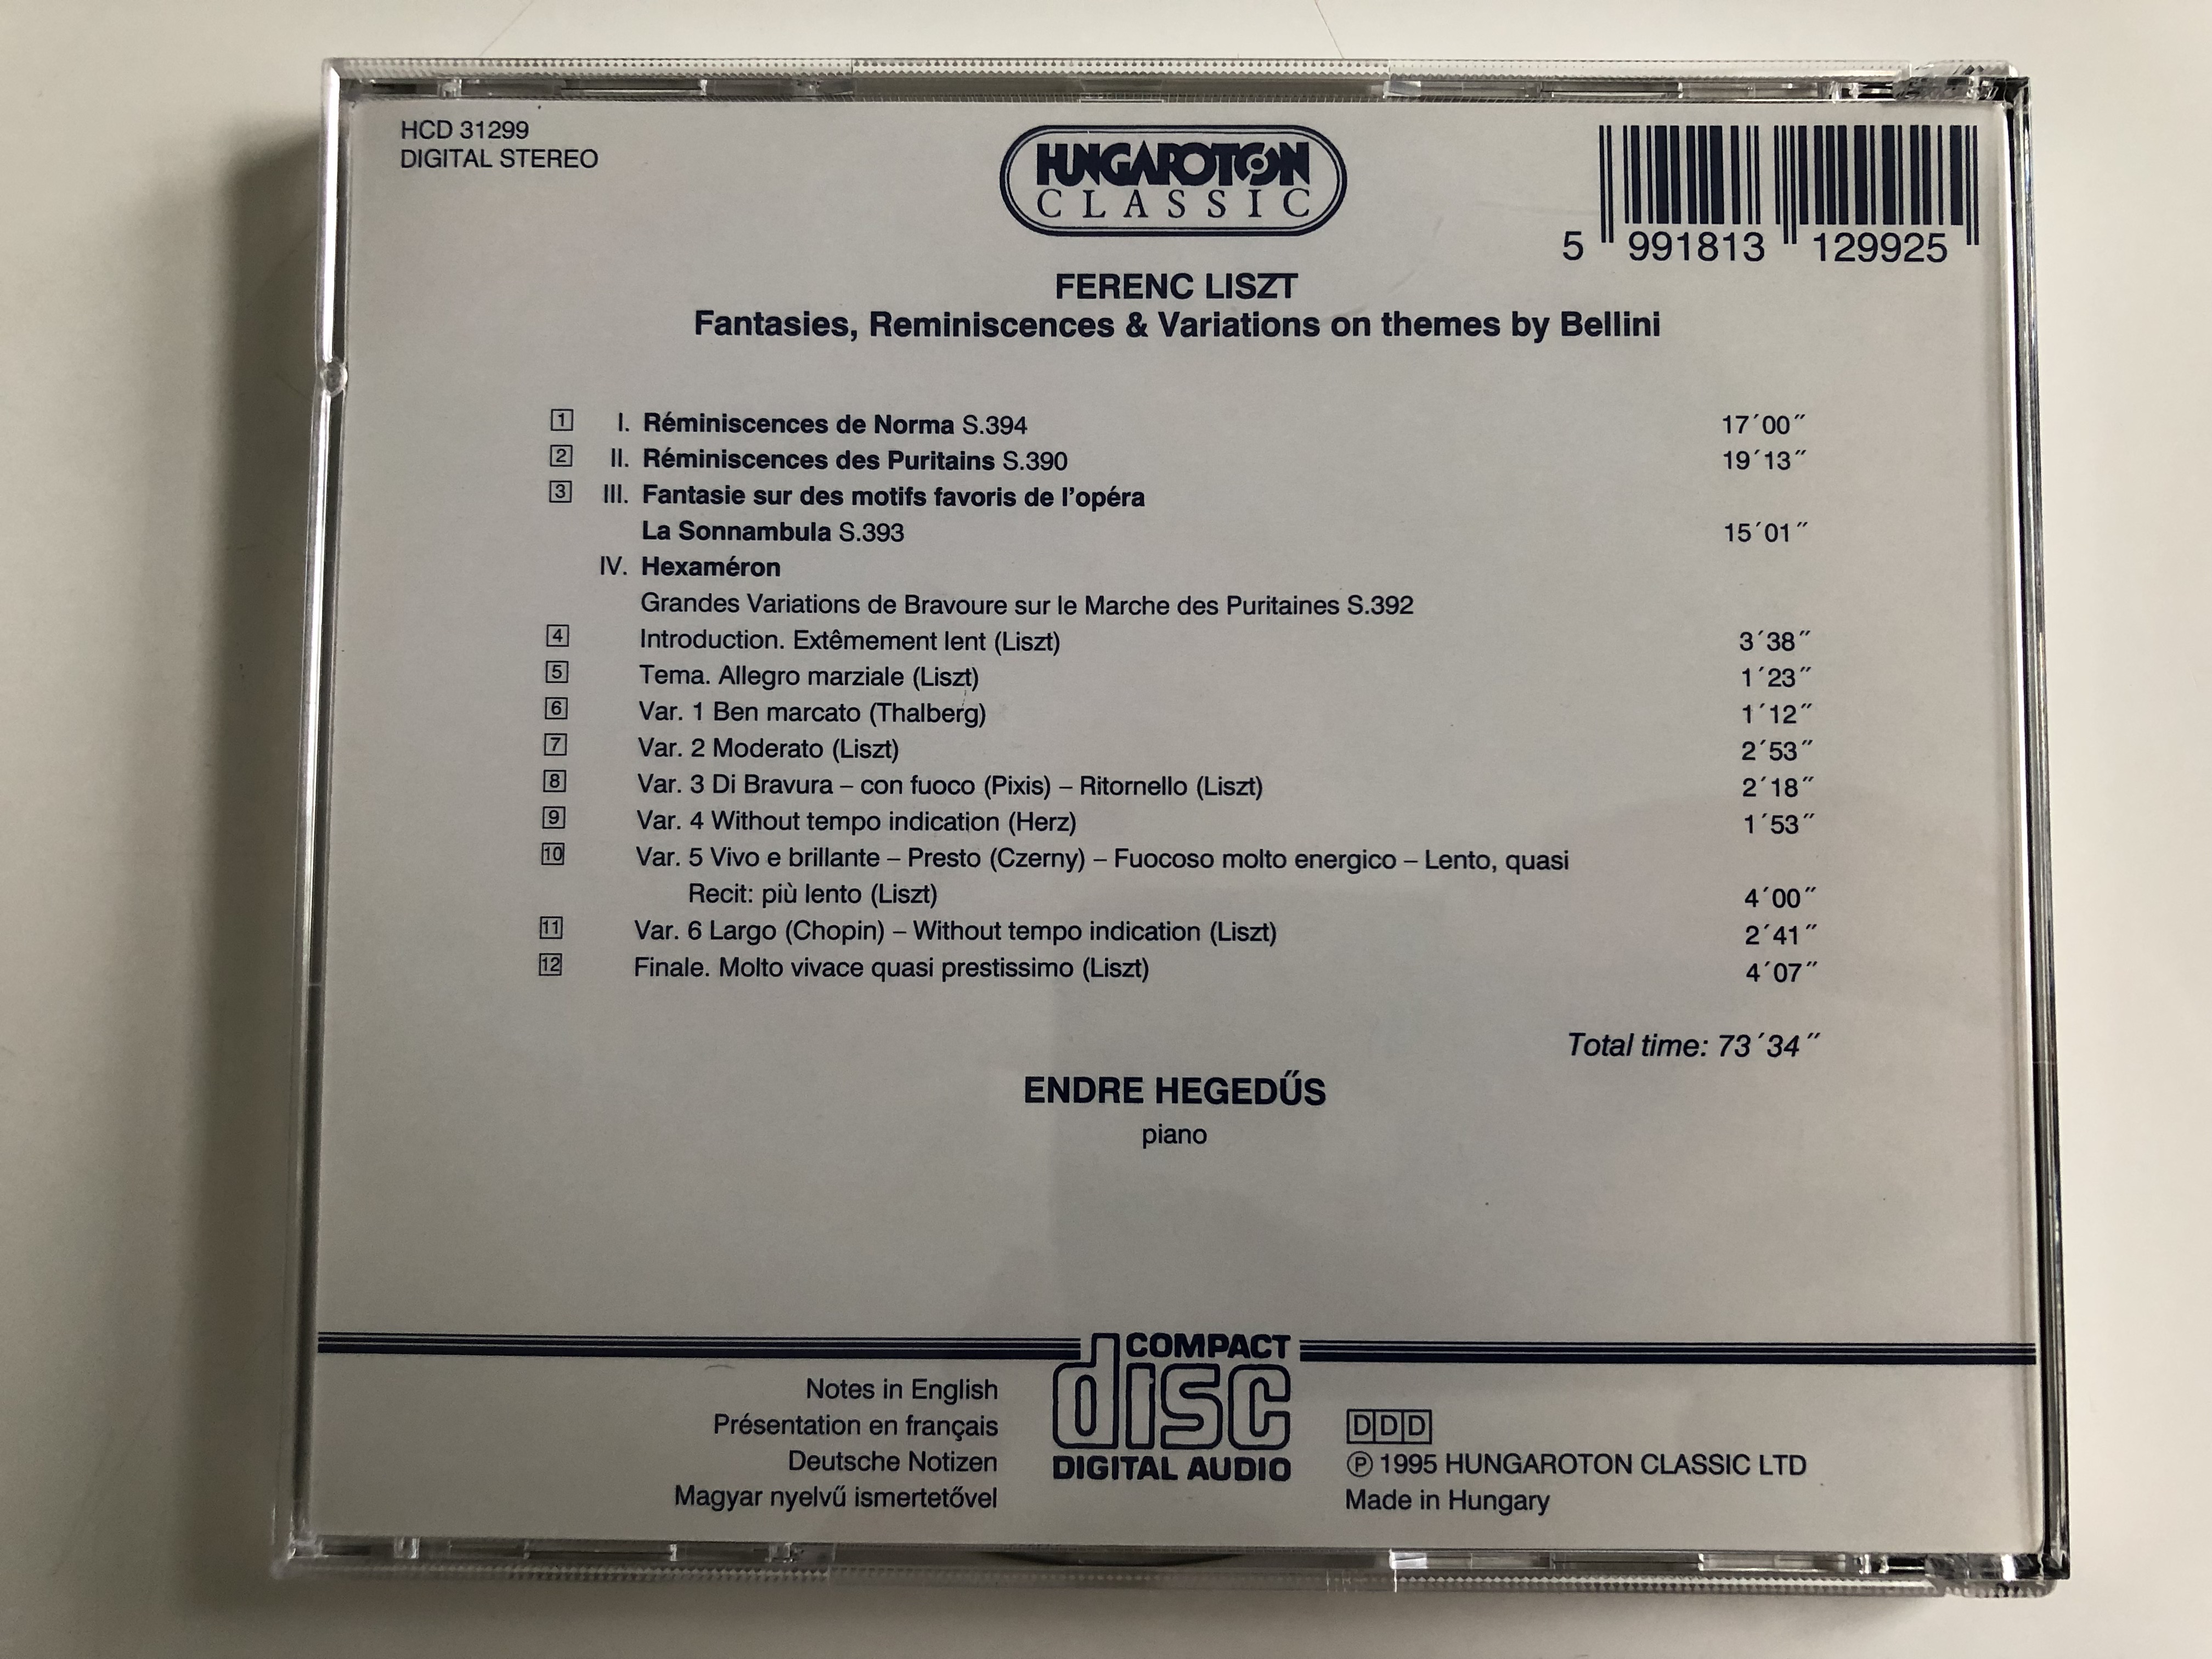 liszt-fantasies-reminiscences-variations-on-themes-by-bellini-i-puritani-norma-la-sonnambula-piano-endre-heged-s-hungaroton-audio-cd-1995-stereo-hcd-31299-8-.jpg